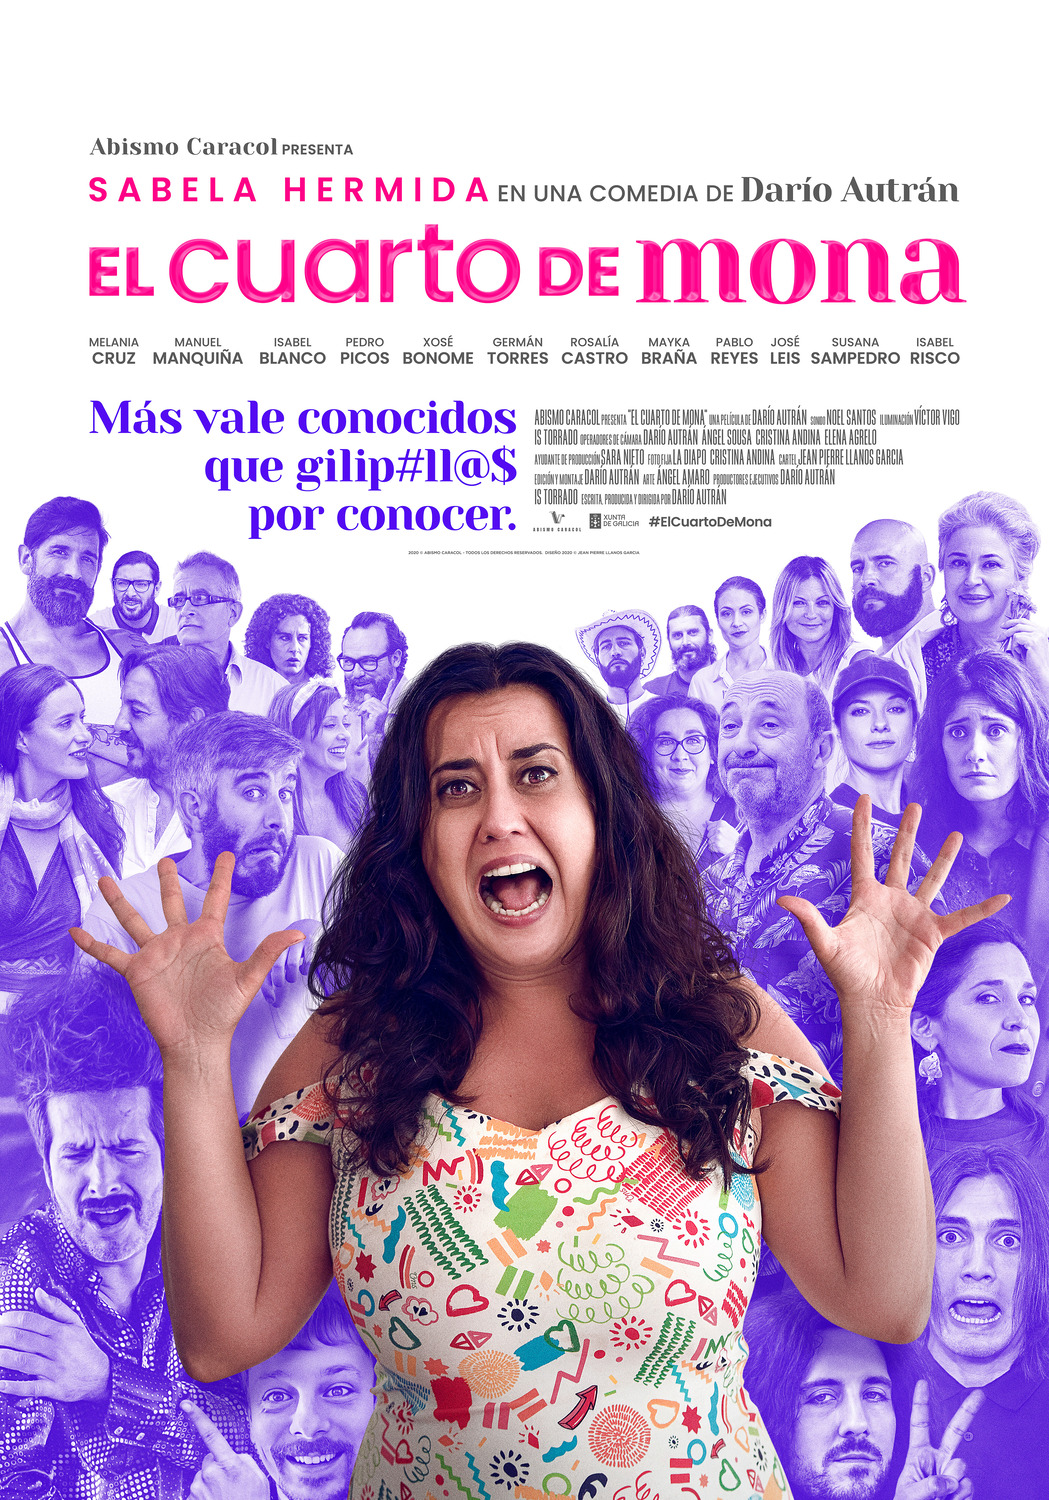 Extra Large Movie Poster Image for El cuarto de Mona (#2 of 2)